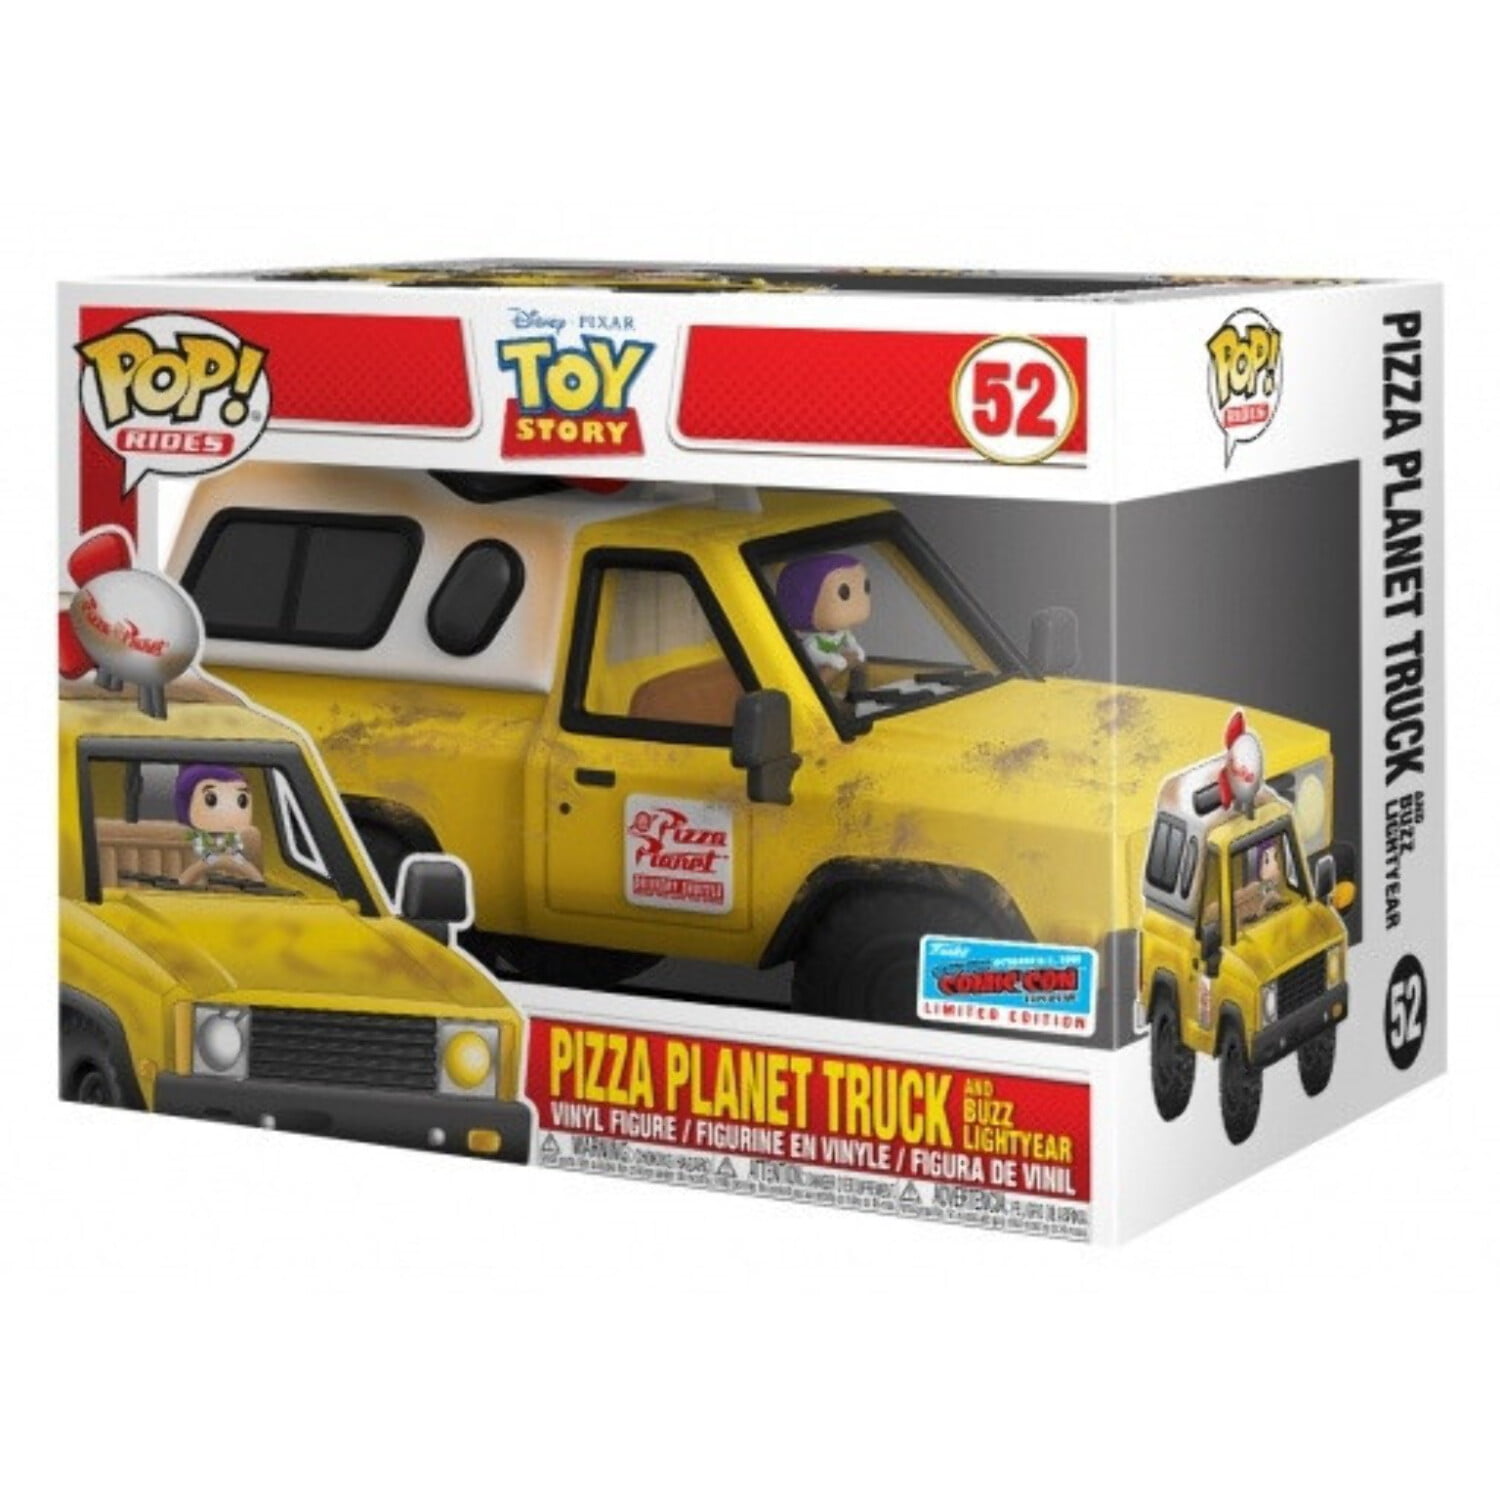 Toy Story Funko Pop! Rides Disney Pixar Pizza Planet Truck & Buzz Lightyear Vinyl Figure 2018 Fall Convention Exclusive Walmart.com